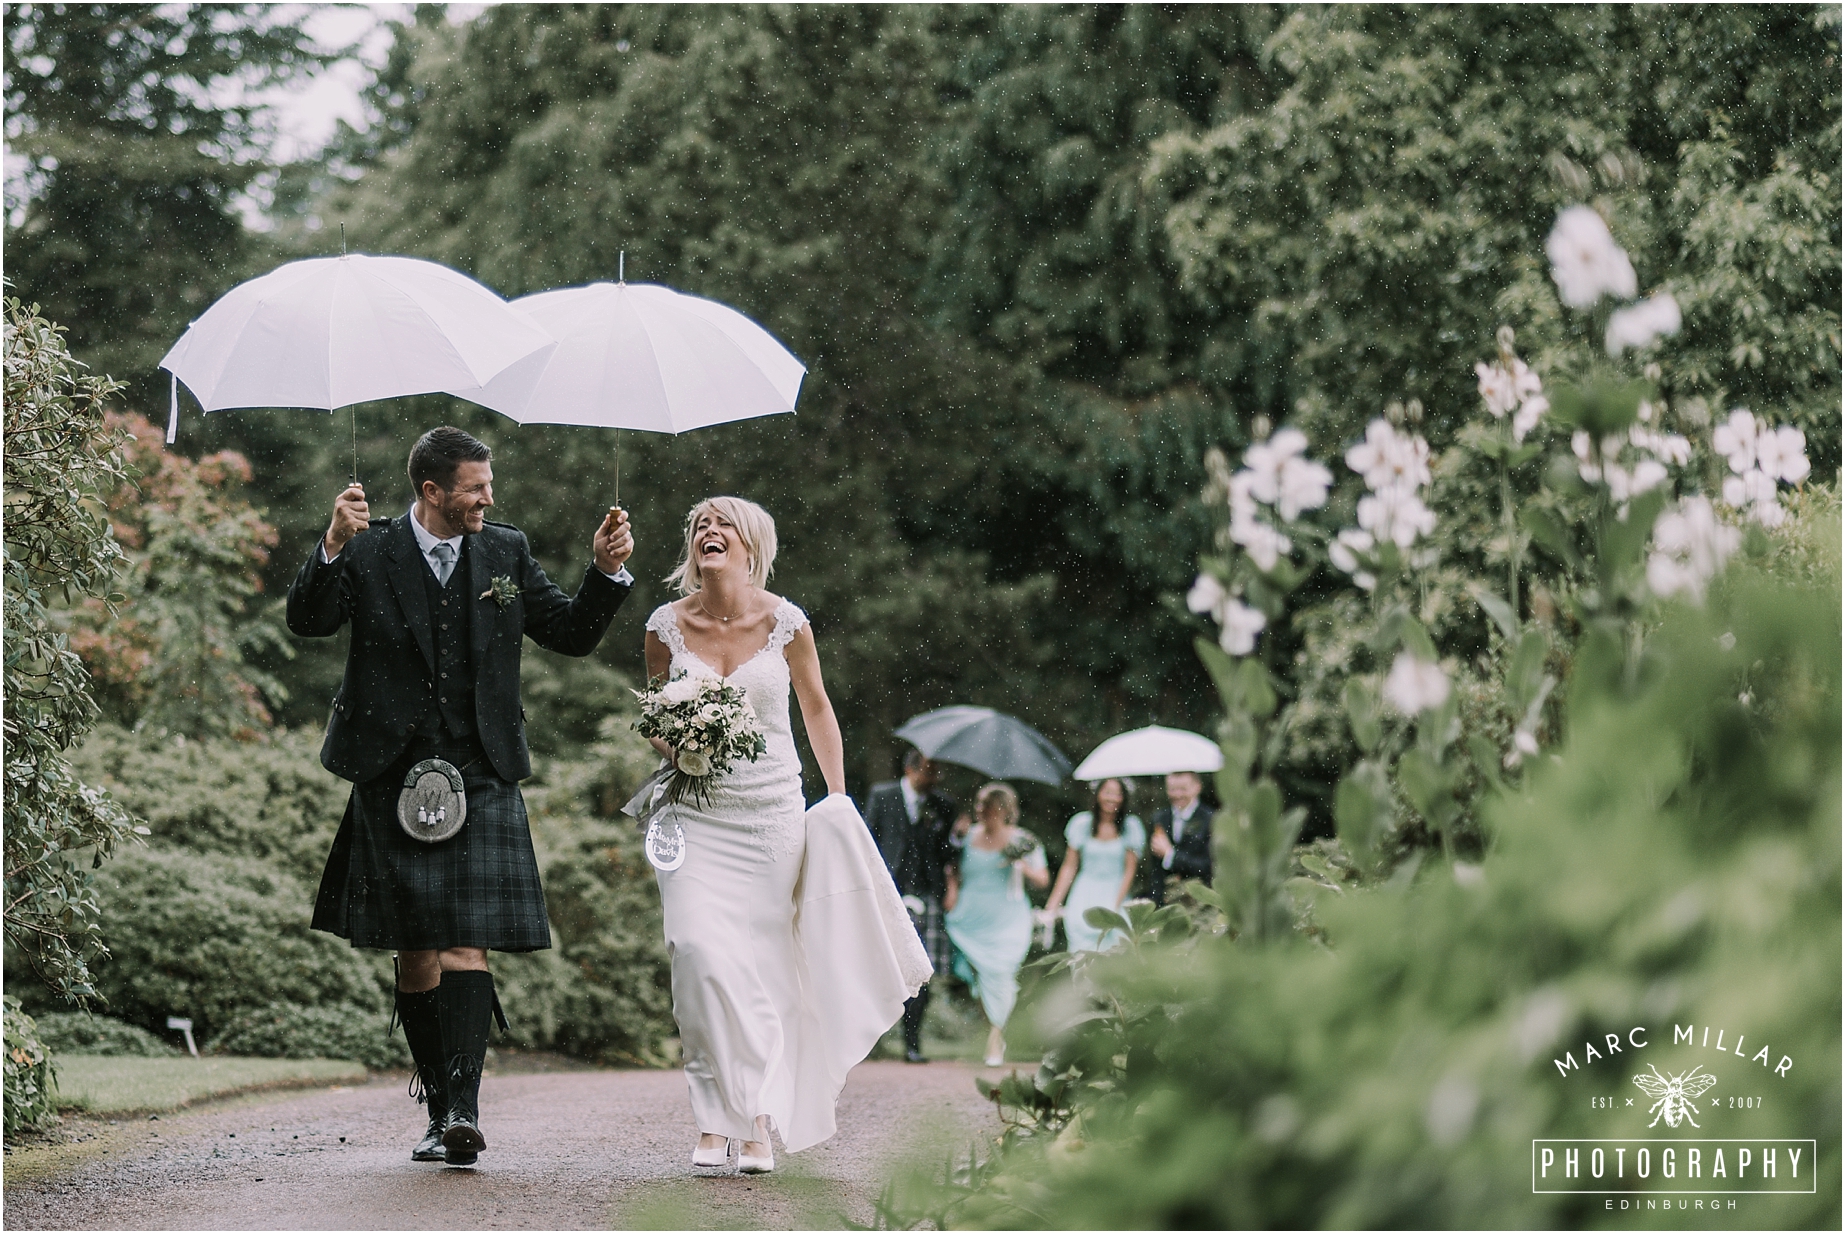  Royal Botanic Gardens Edinburgh Pre Wedding Shoot by Marc Millar Photography 